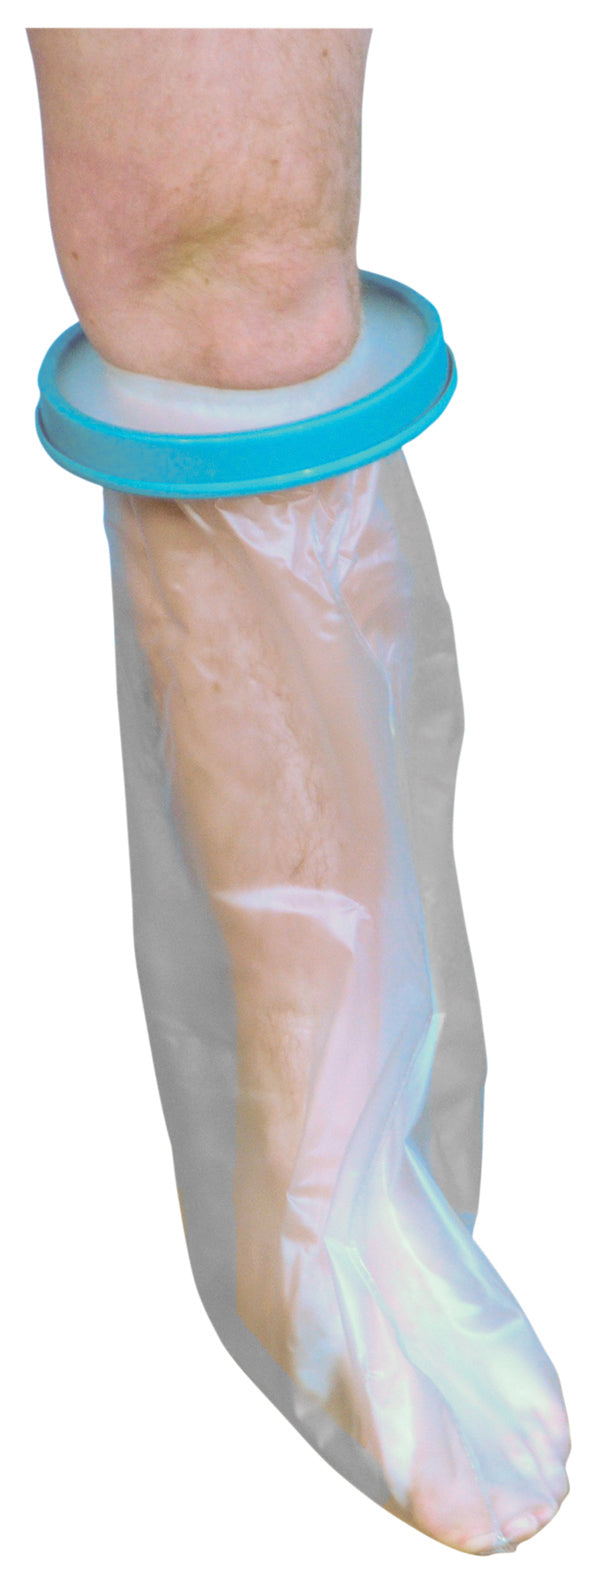 Waterproof Cast and Bandage Protector - Adult Short Leg